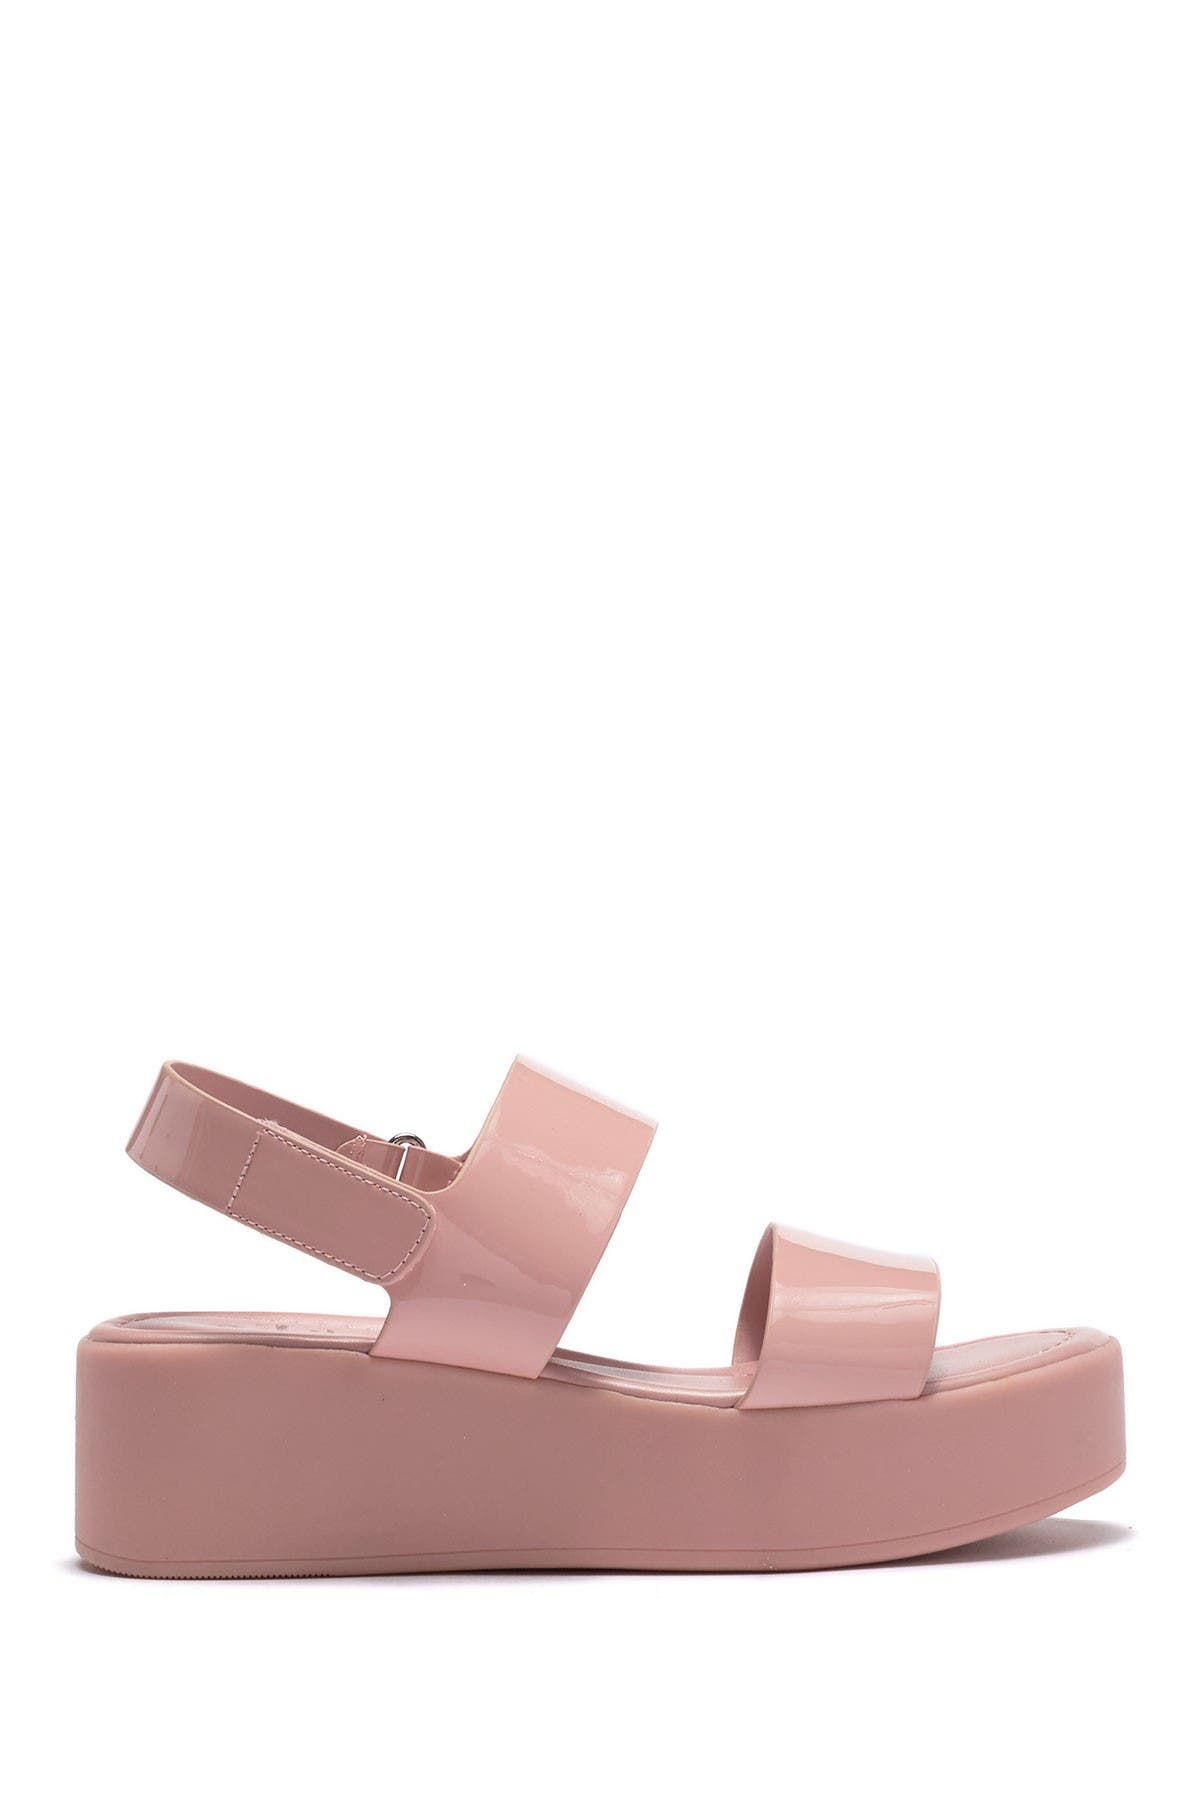 call it spring aderica platform sandal